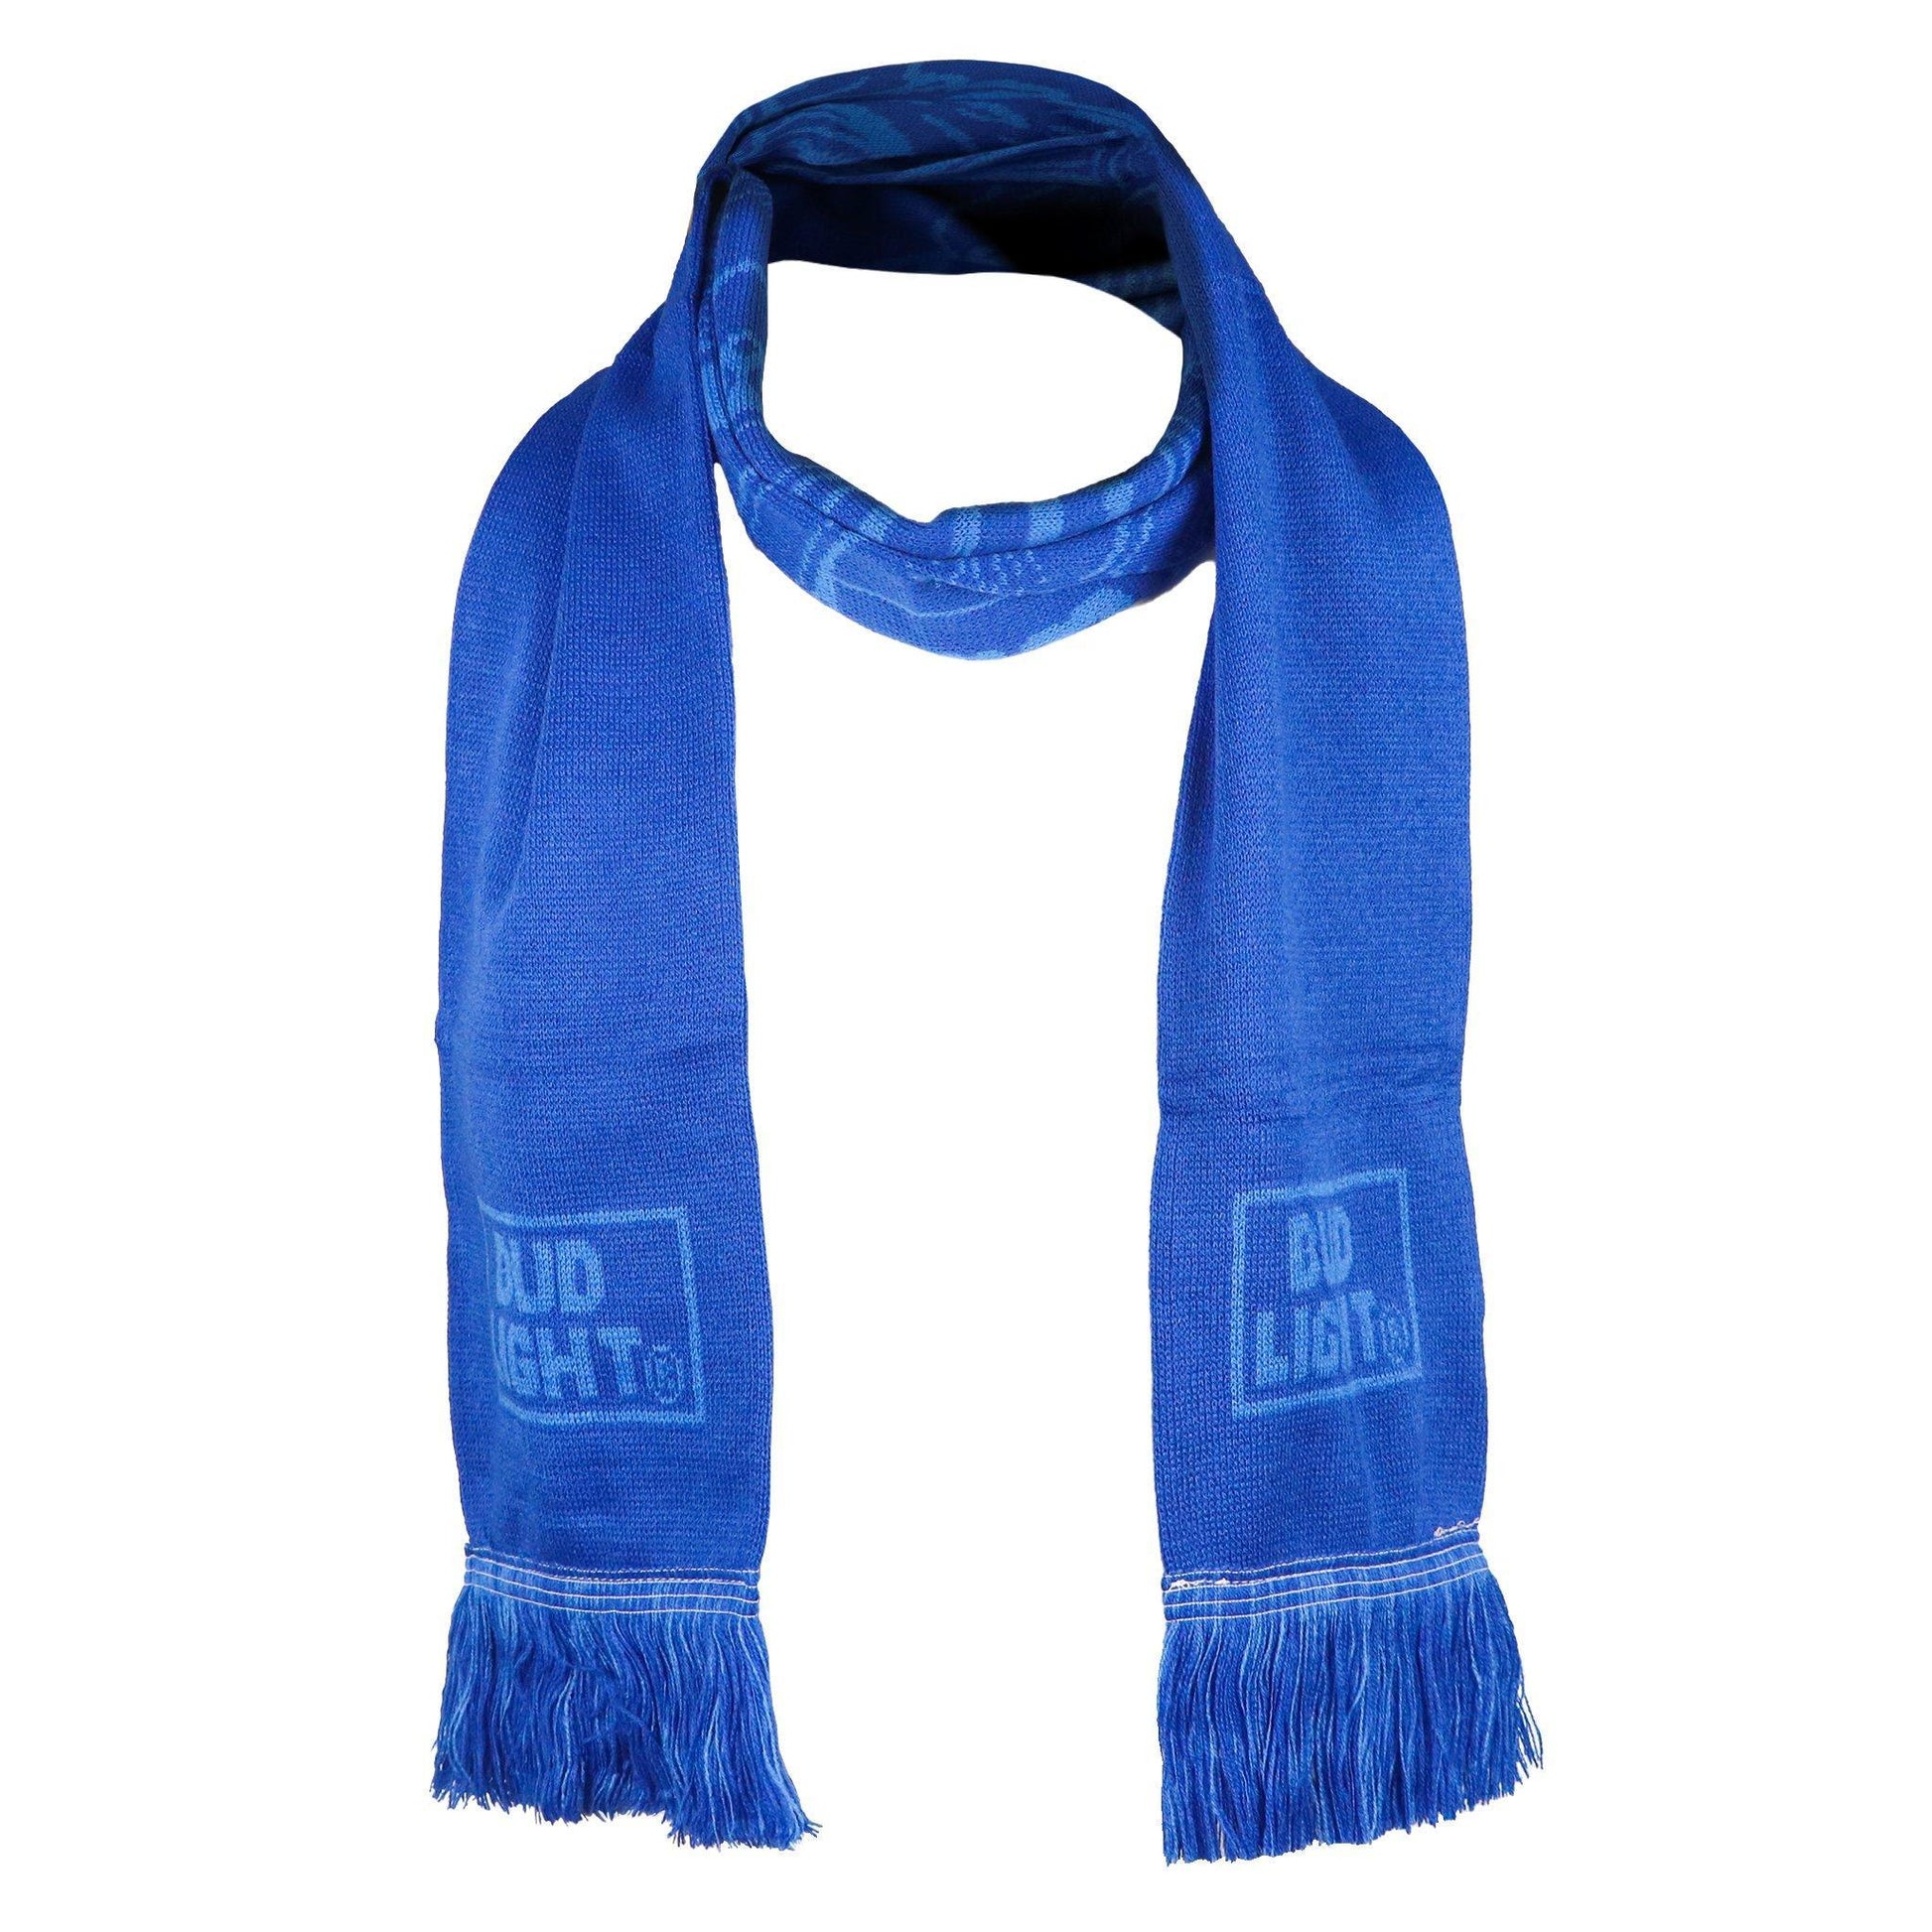 blue bud light crest scarf